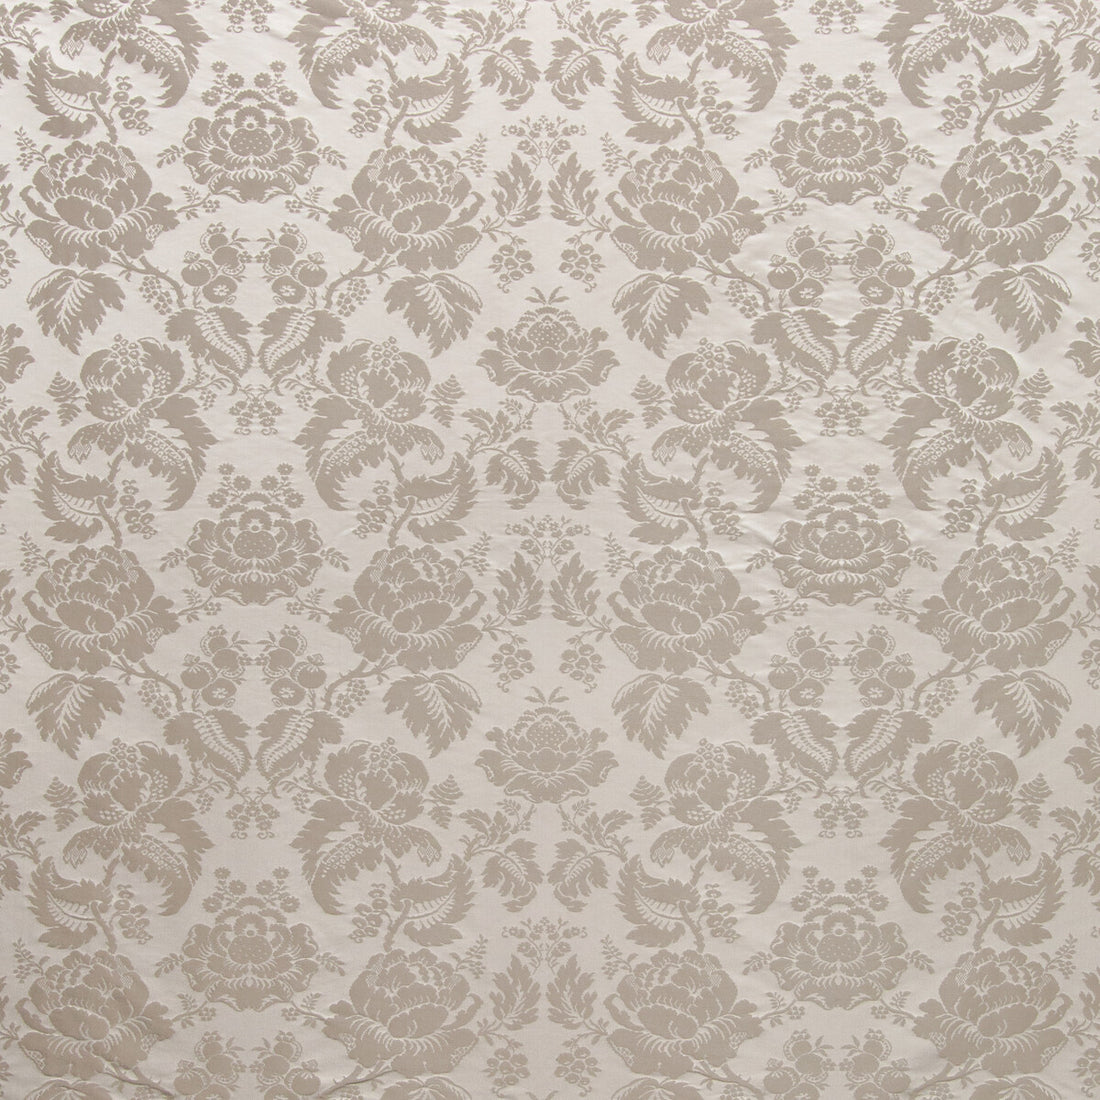 Moulins Damask fabric in grey color - pattern BR-81035.11.0 - by Brunschwig &amp; Fils